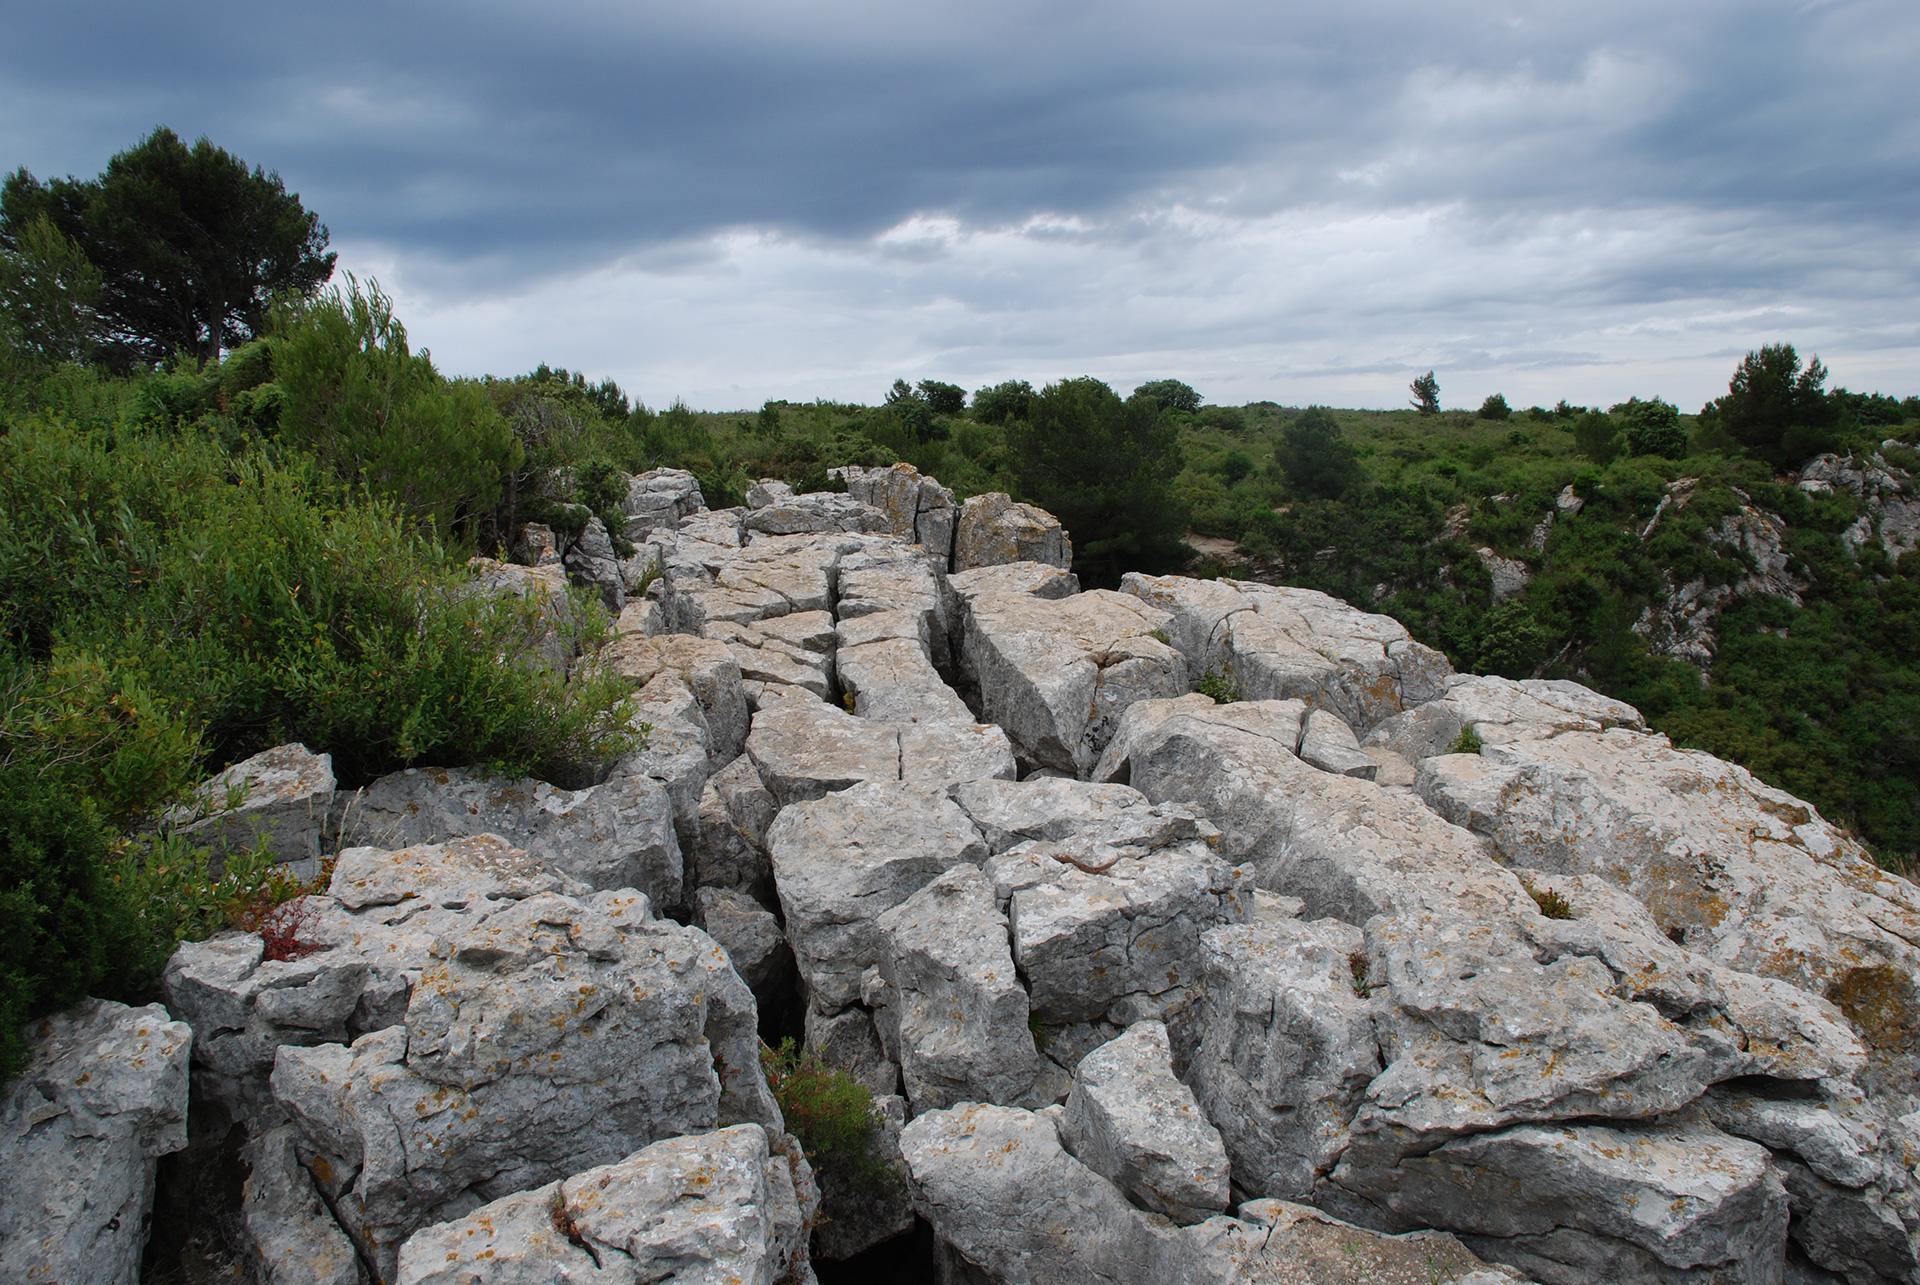  Lapiaz dug by karstic erosion in limestone soils 